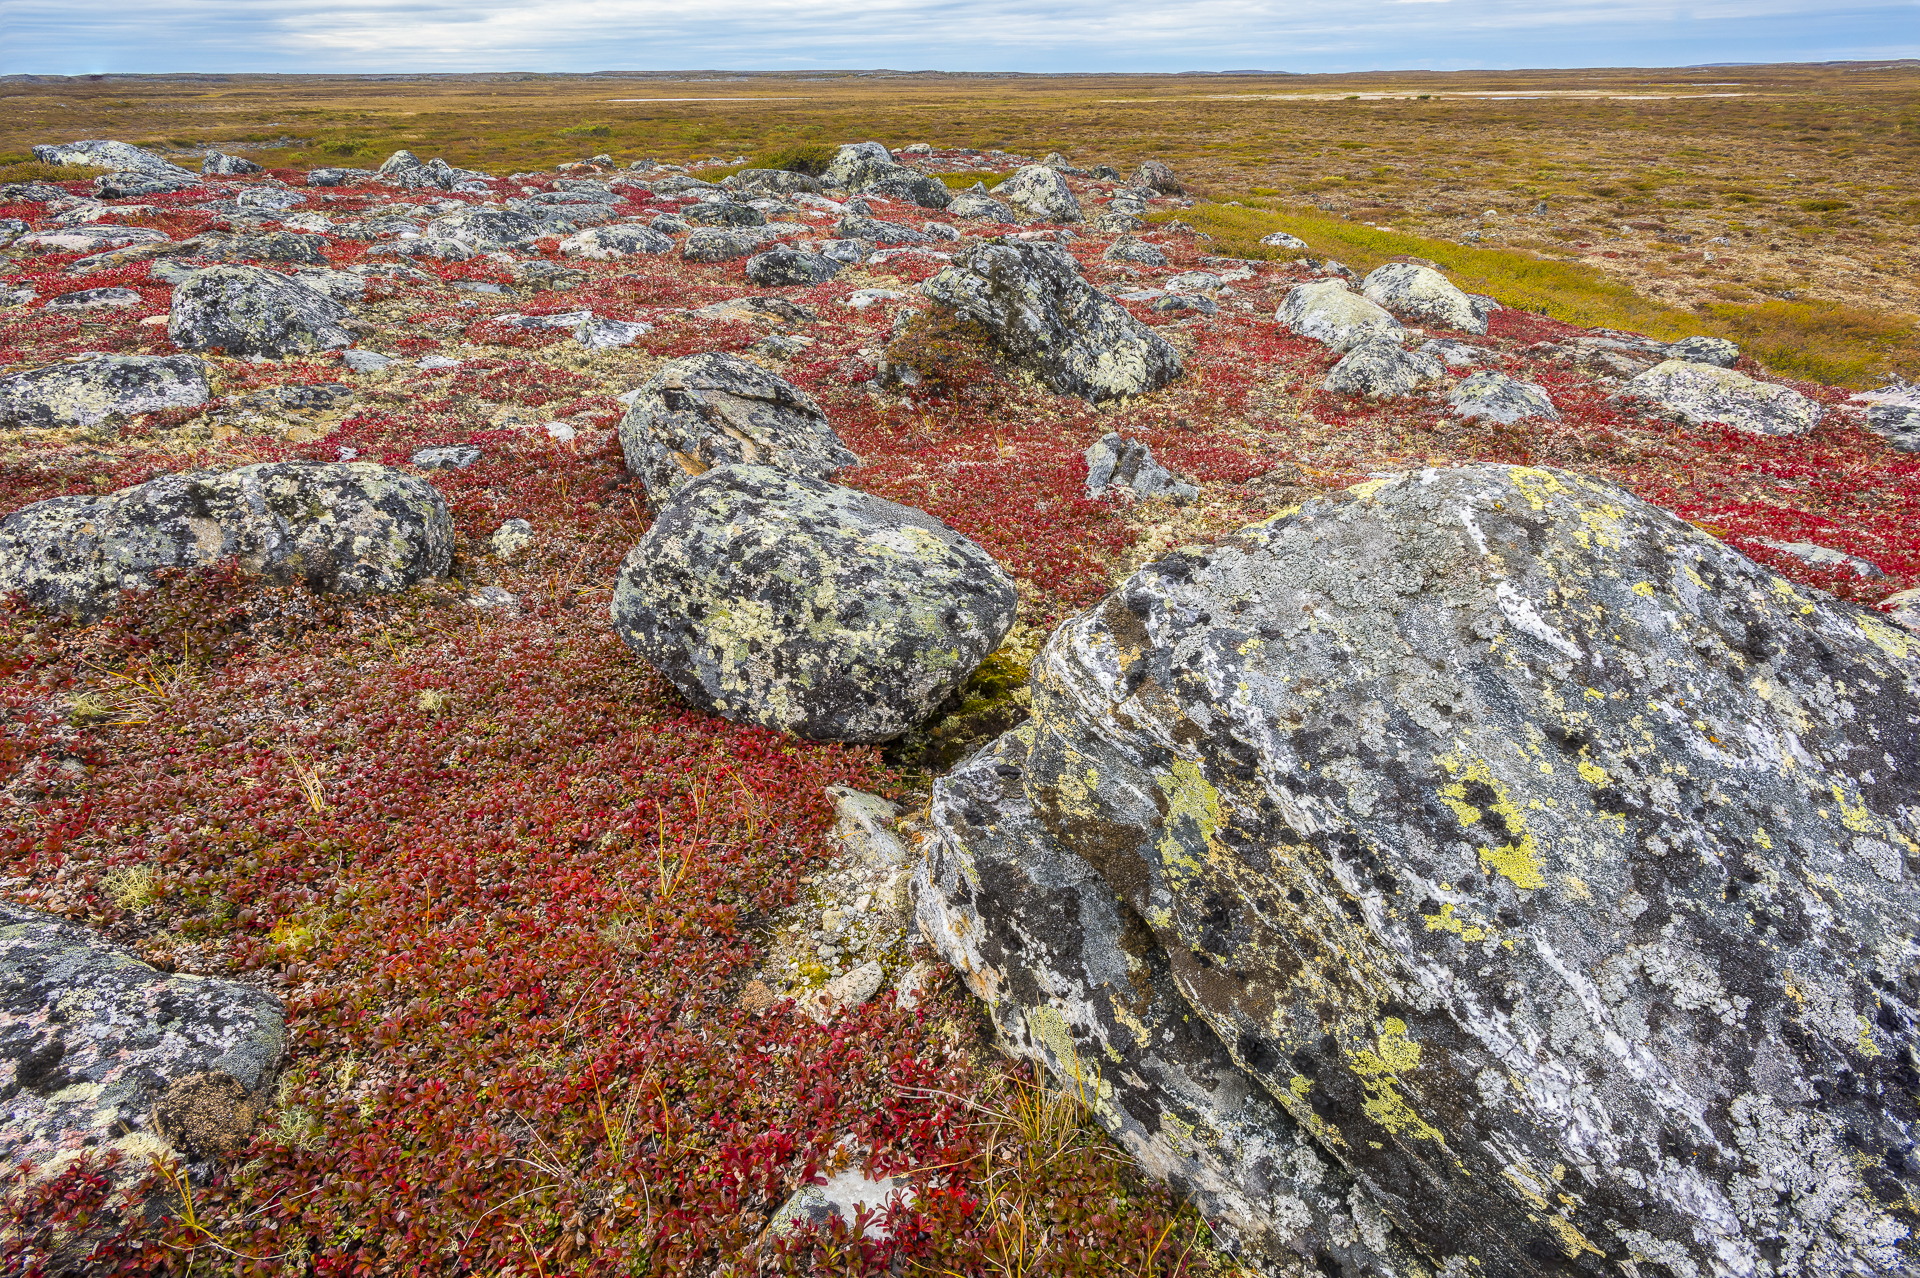 Arctic tundra in fall colors. Nunavik region, Canada.